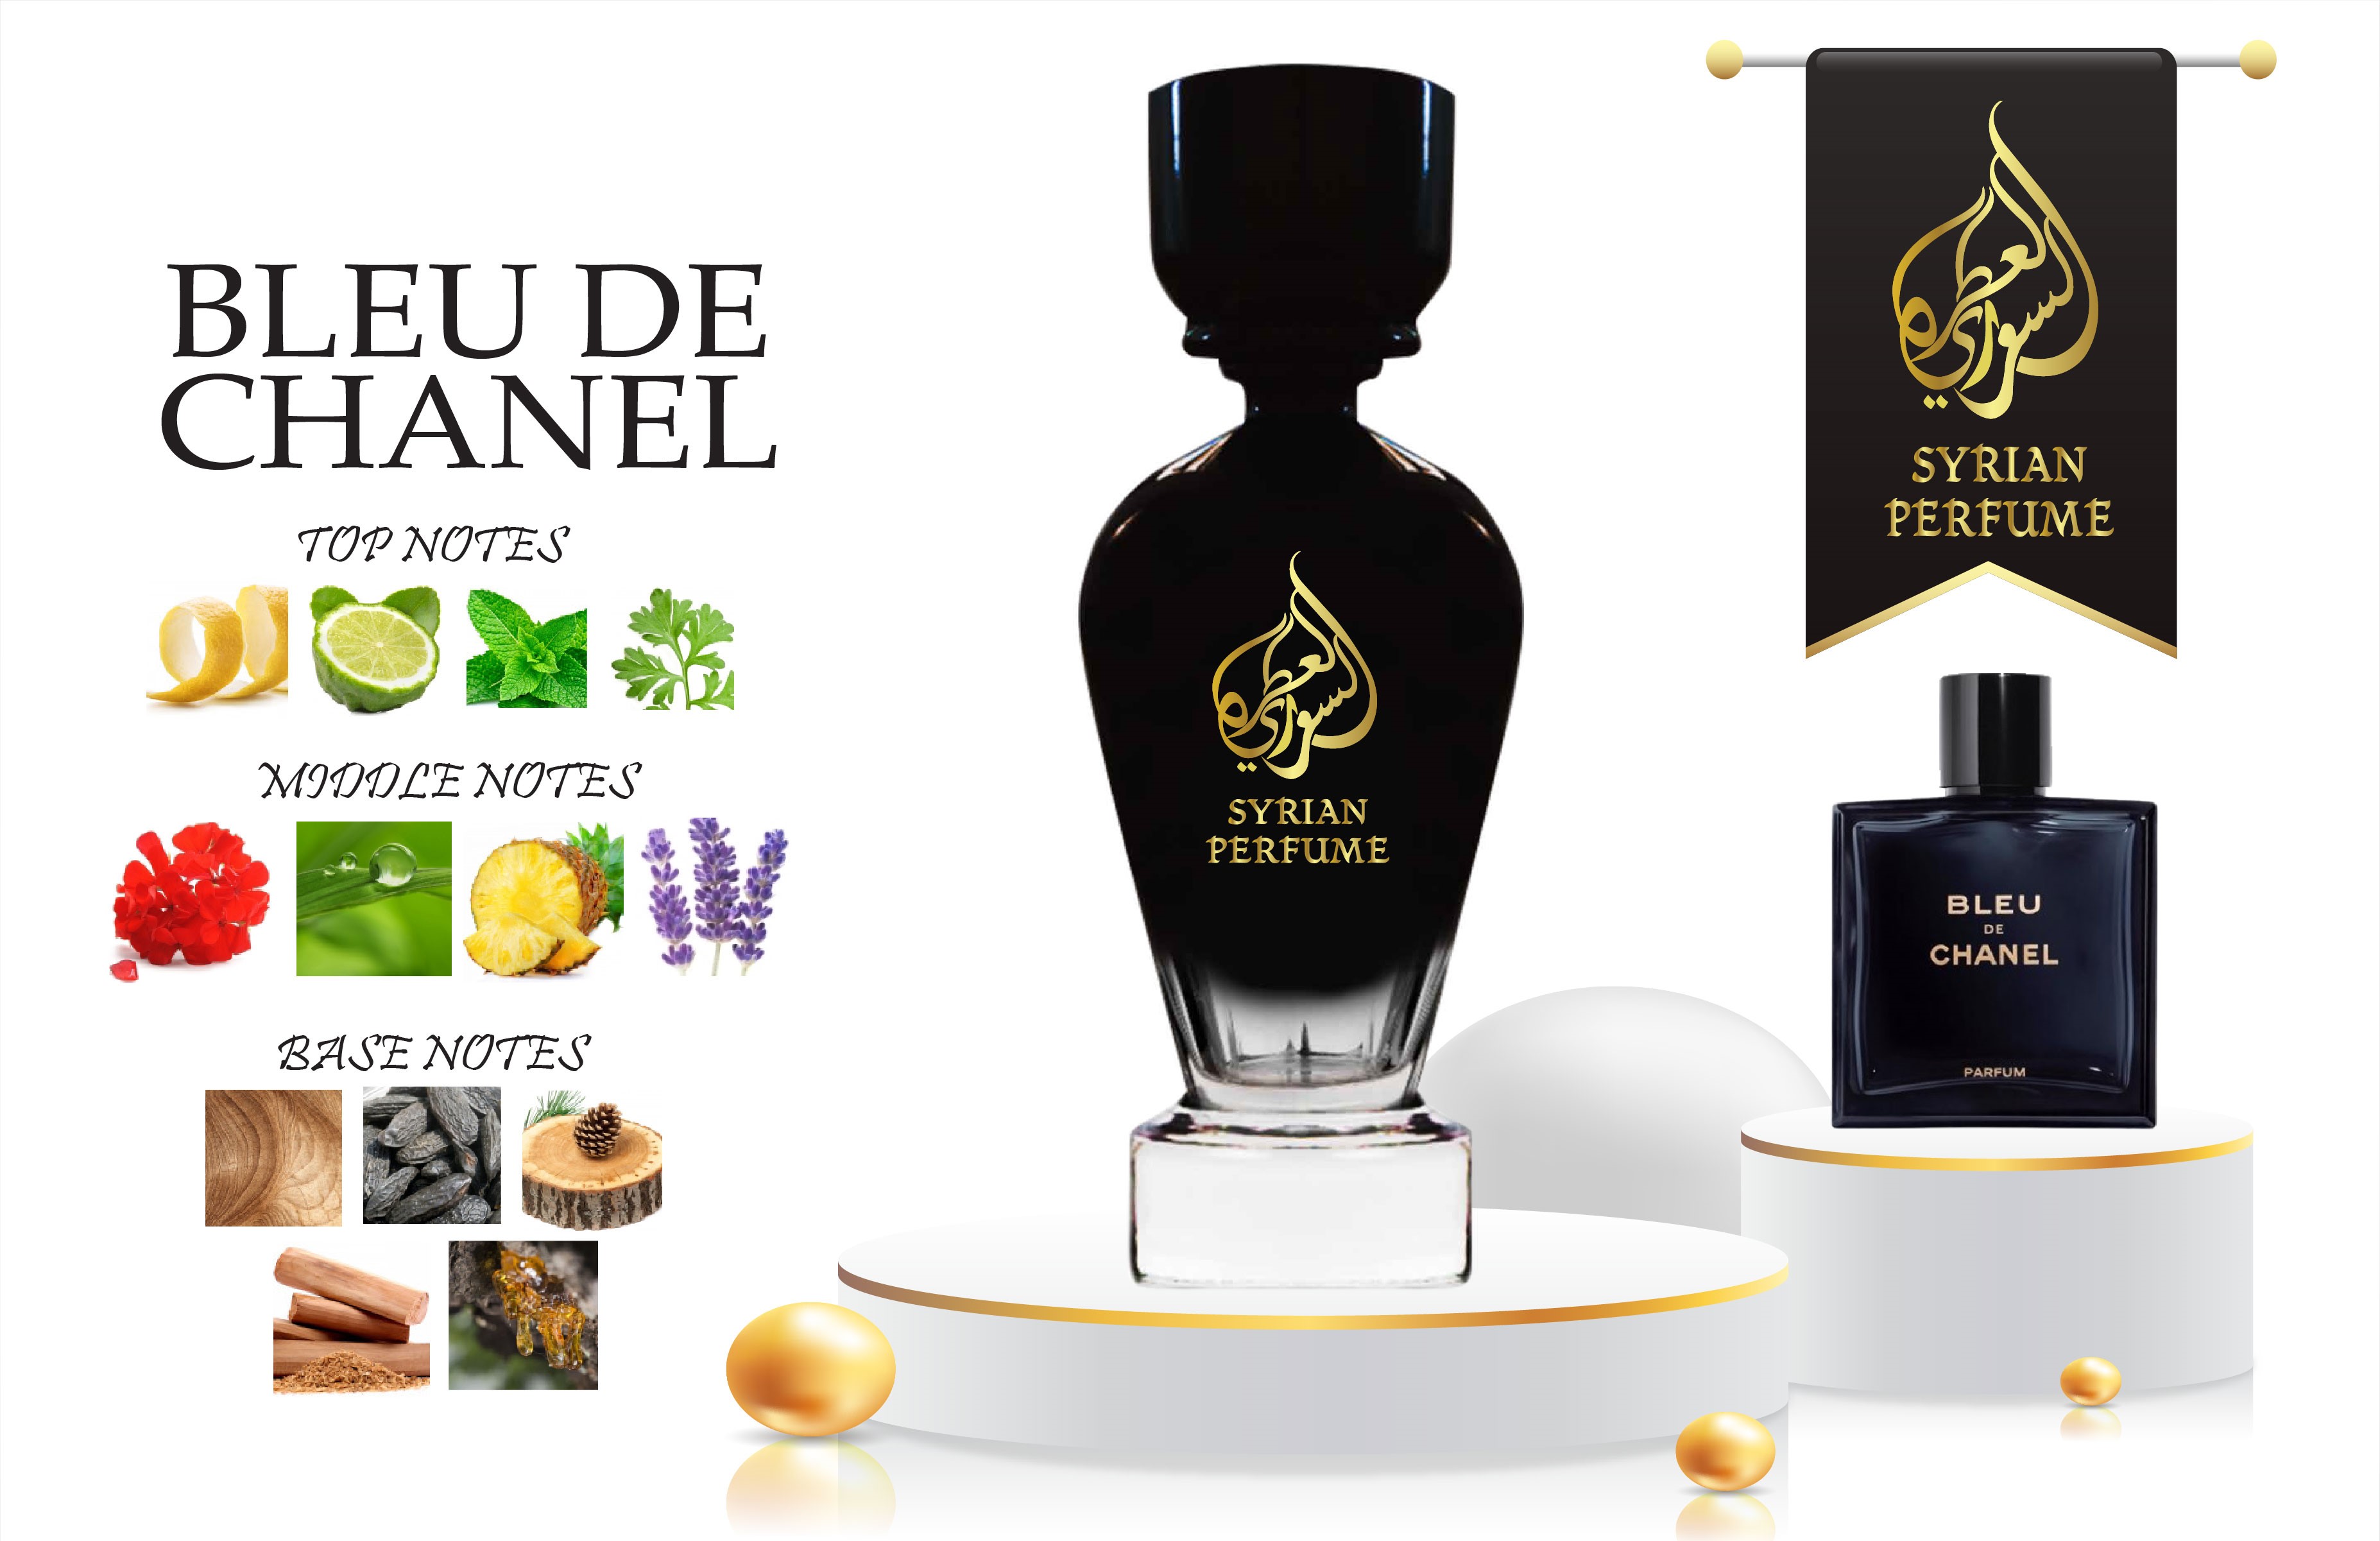 Syrian Perfume Bleu De Chanel 75ml For Him